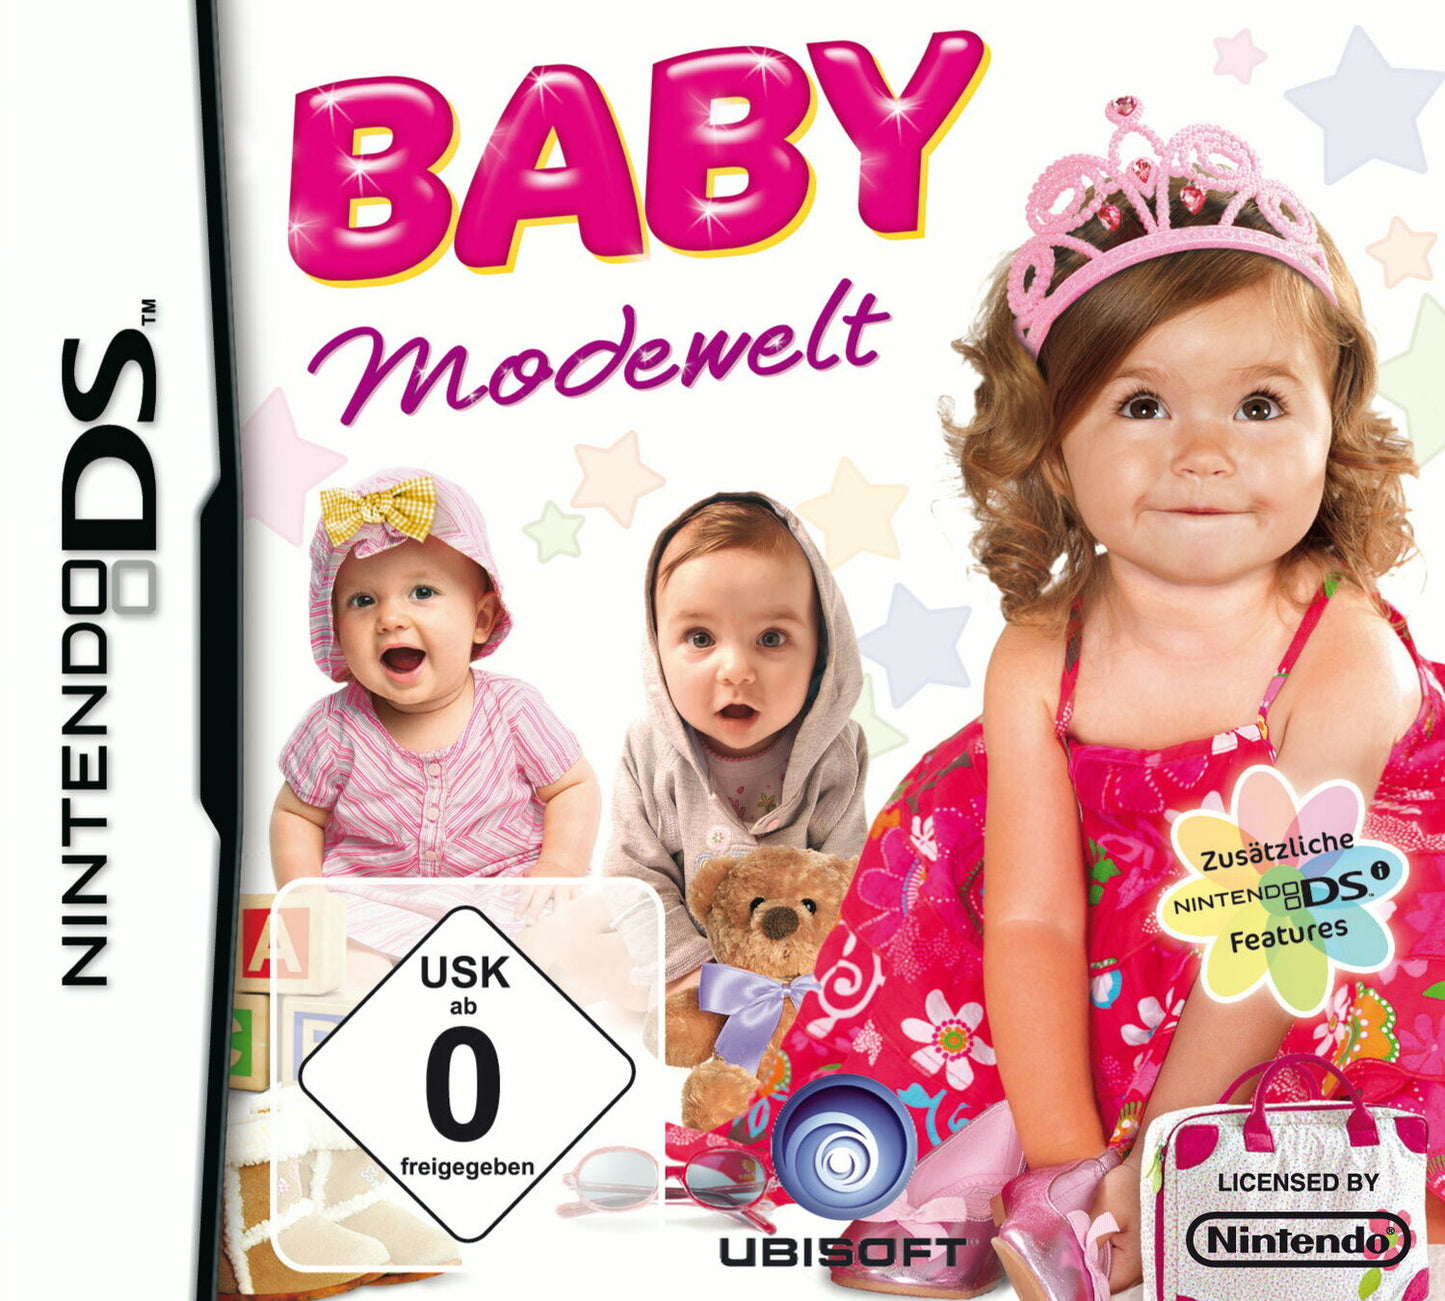 Baby-Modewelt